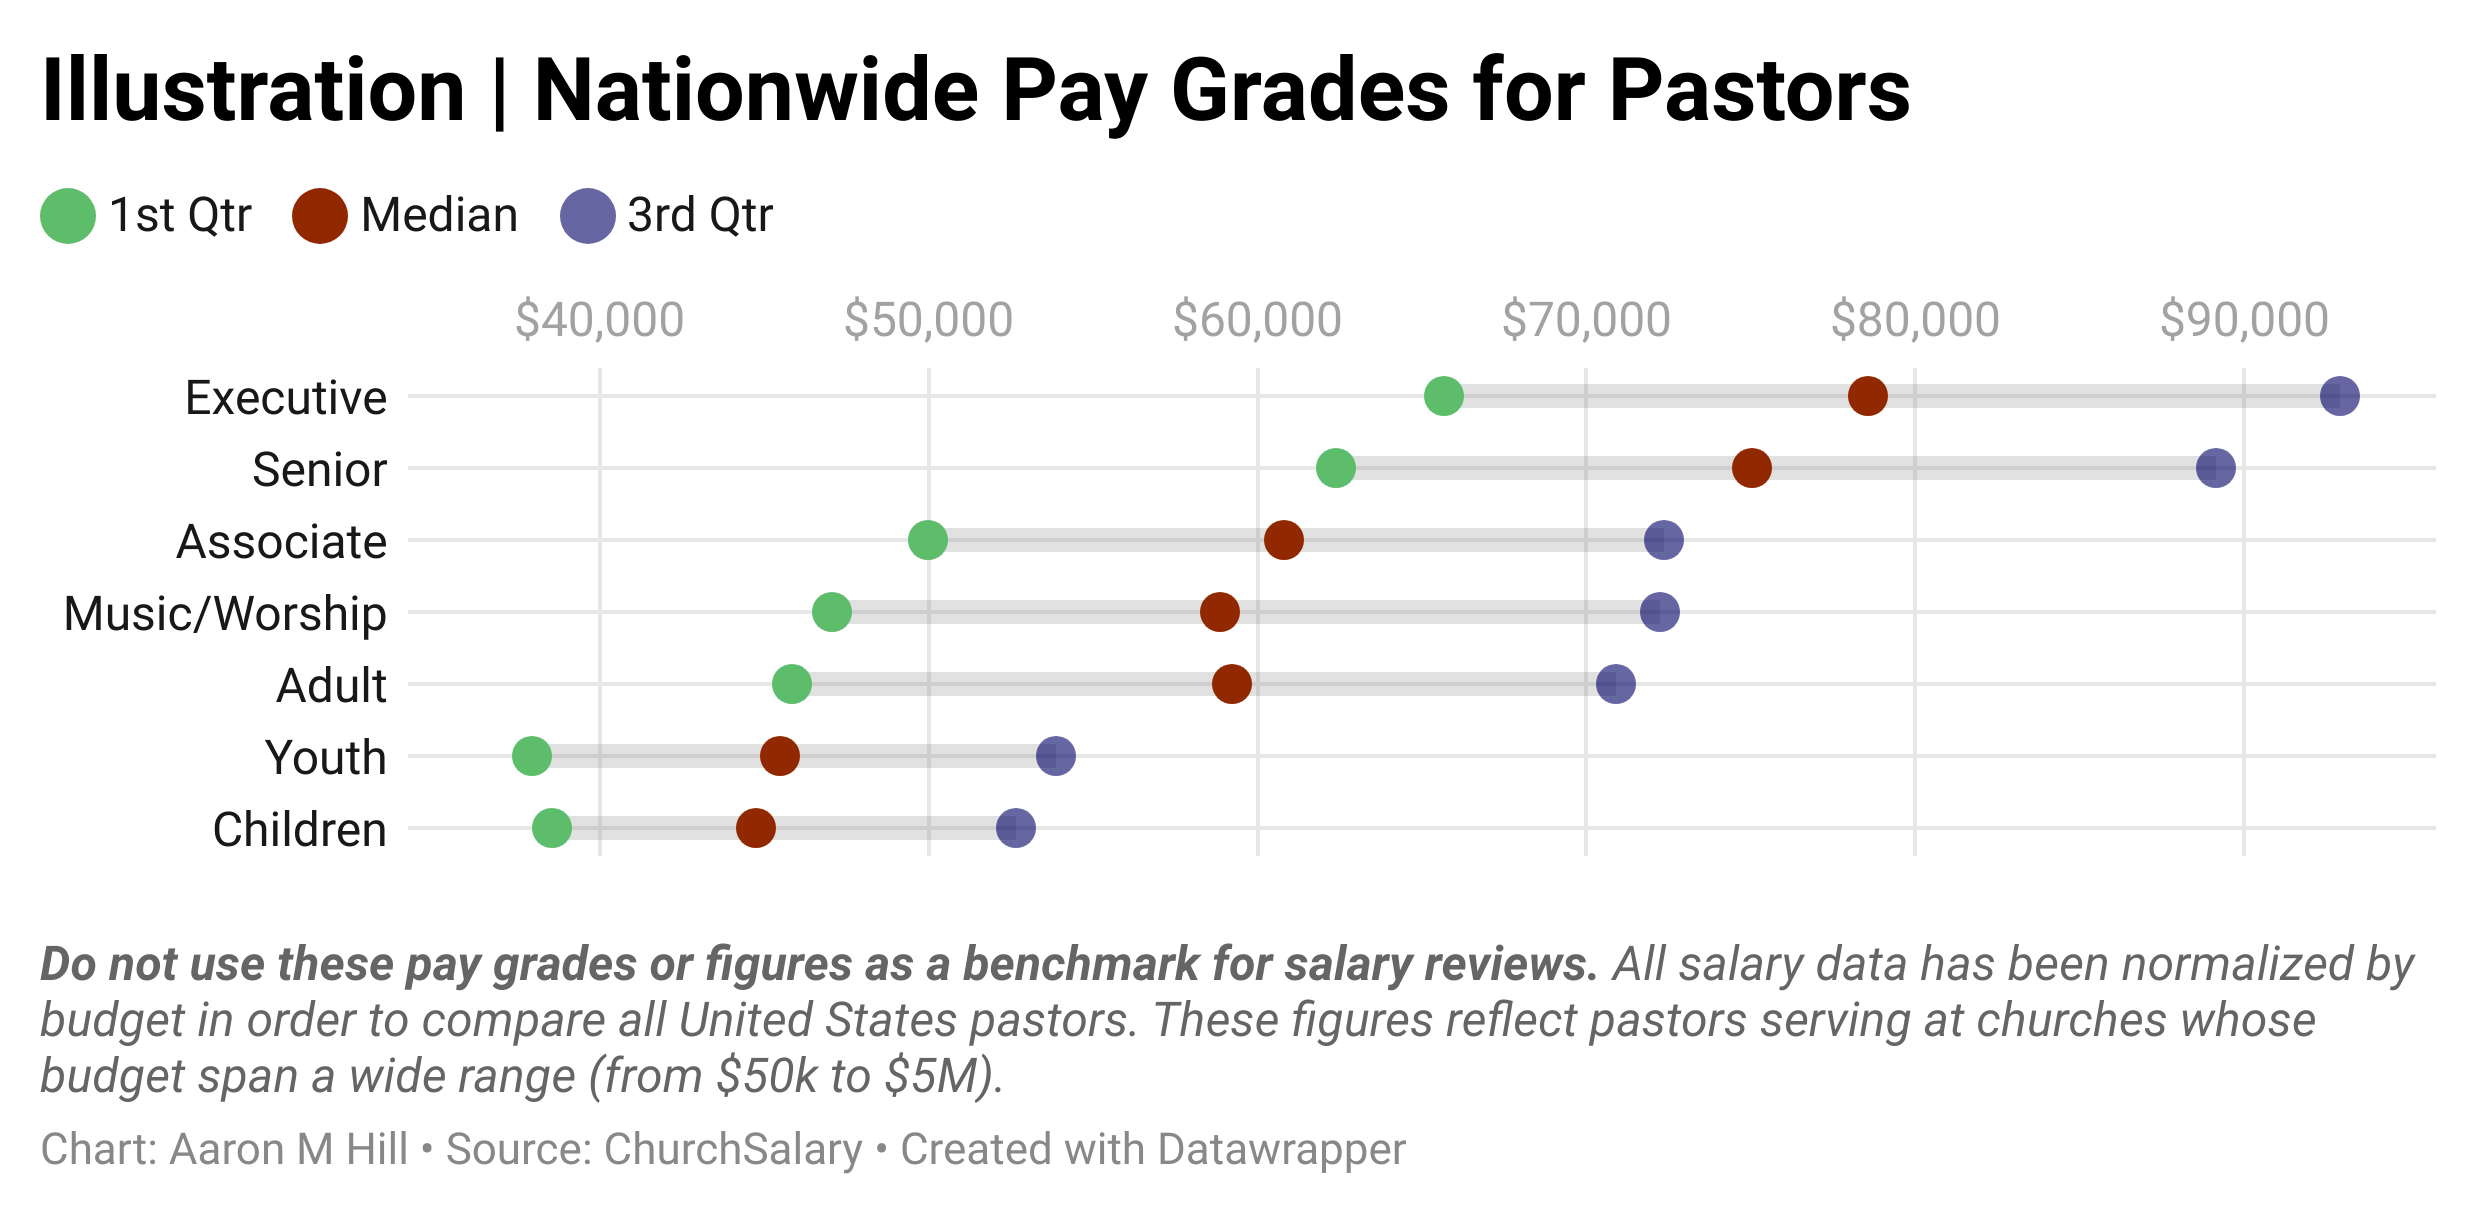 L5YsG-illustration-nationwide-pay-grades-for-pastors-2.png